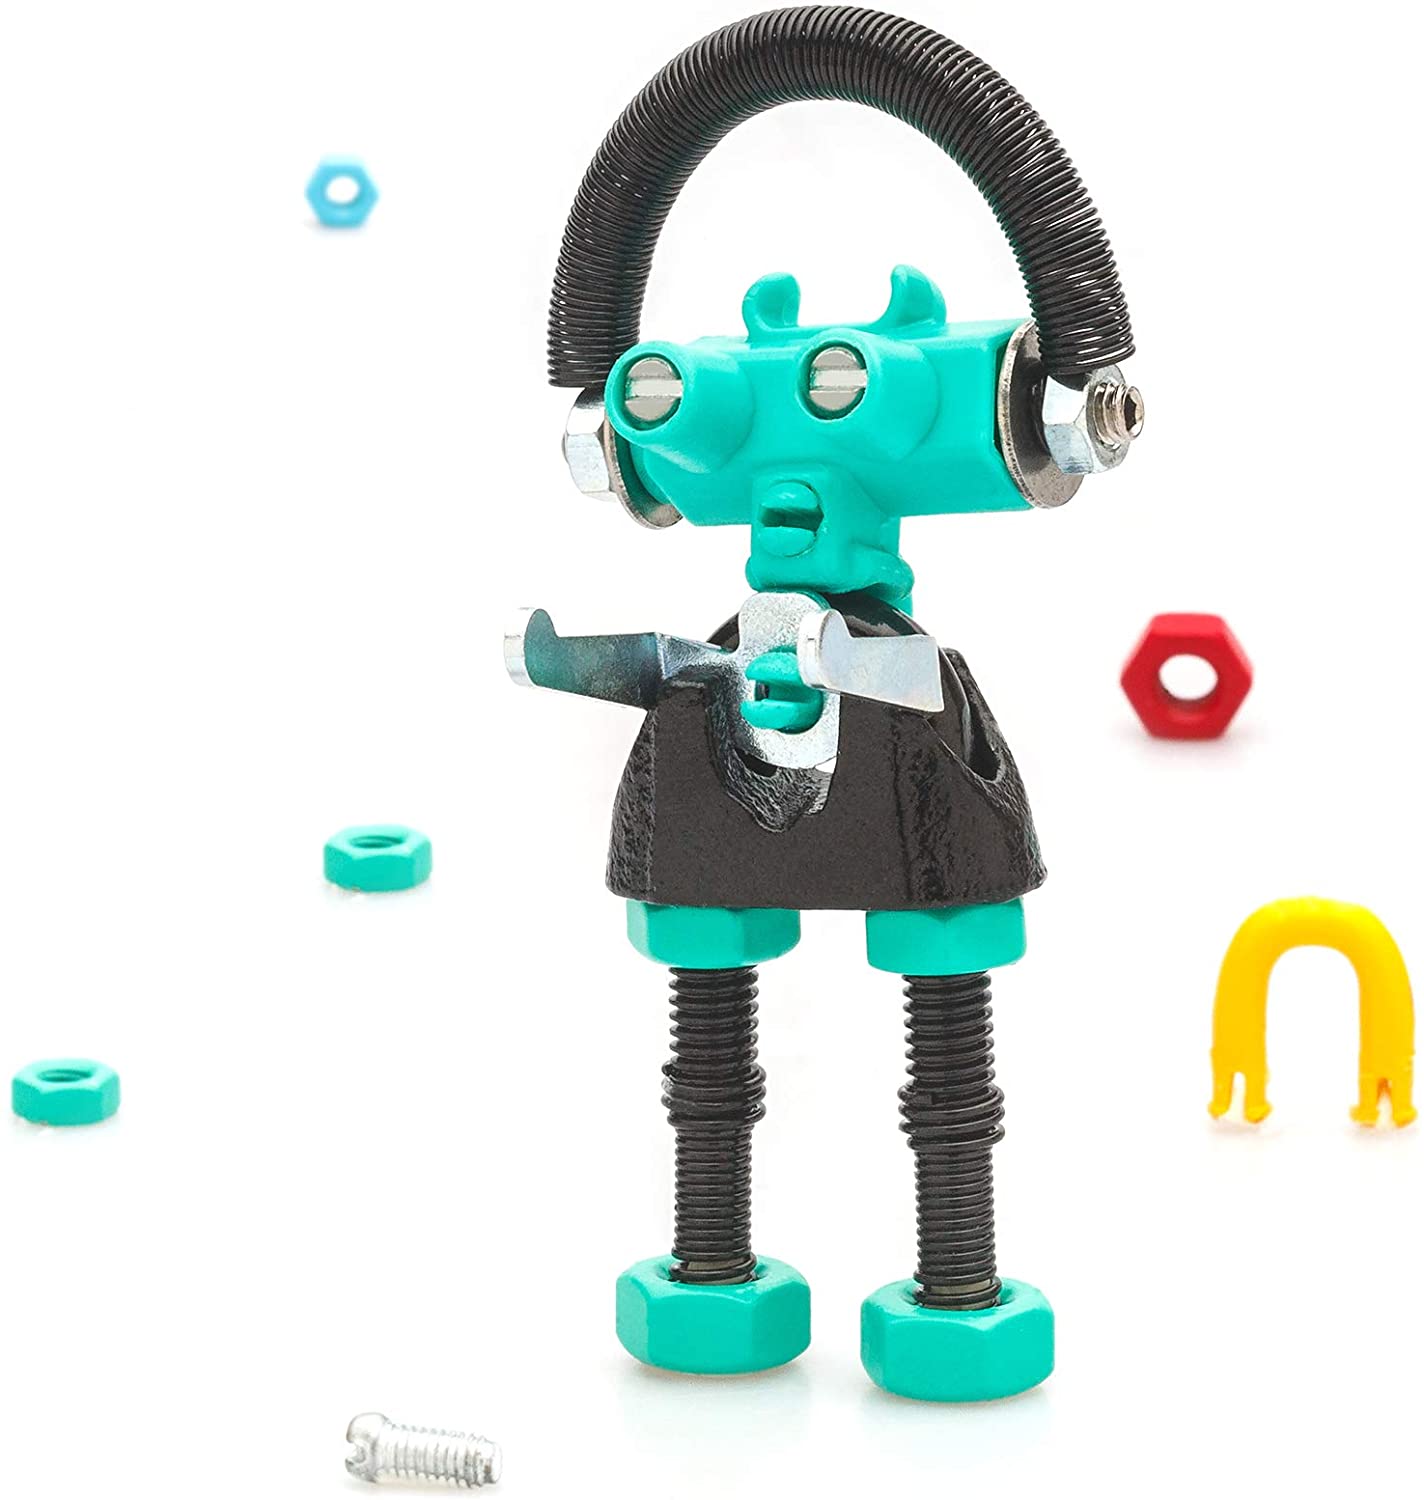 The OffBits DIY Robot Toy BabaBit - Geek Gifts